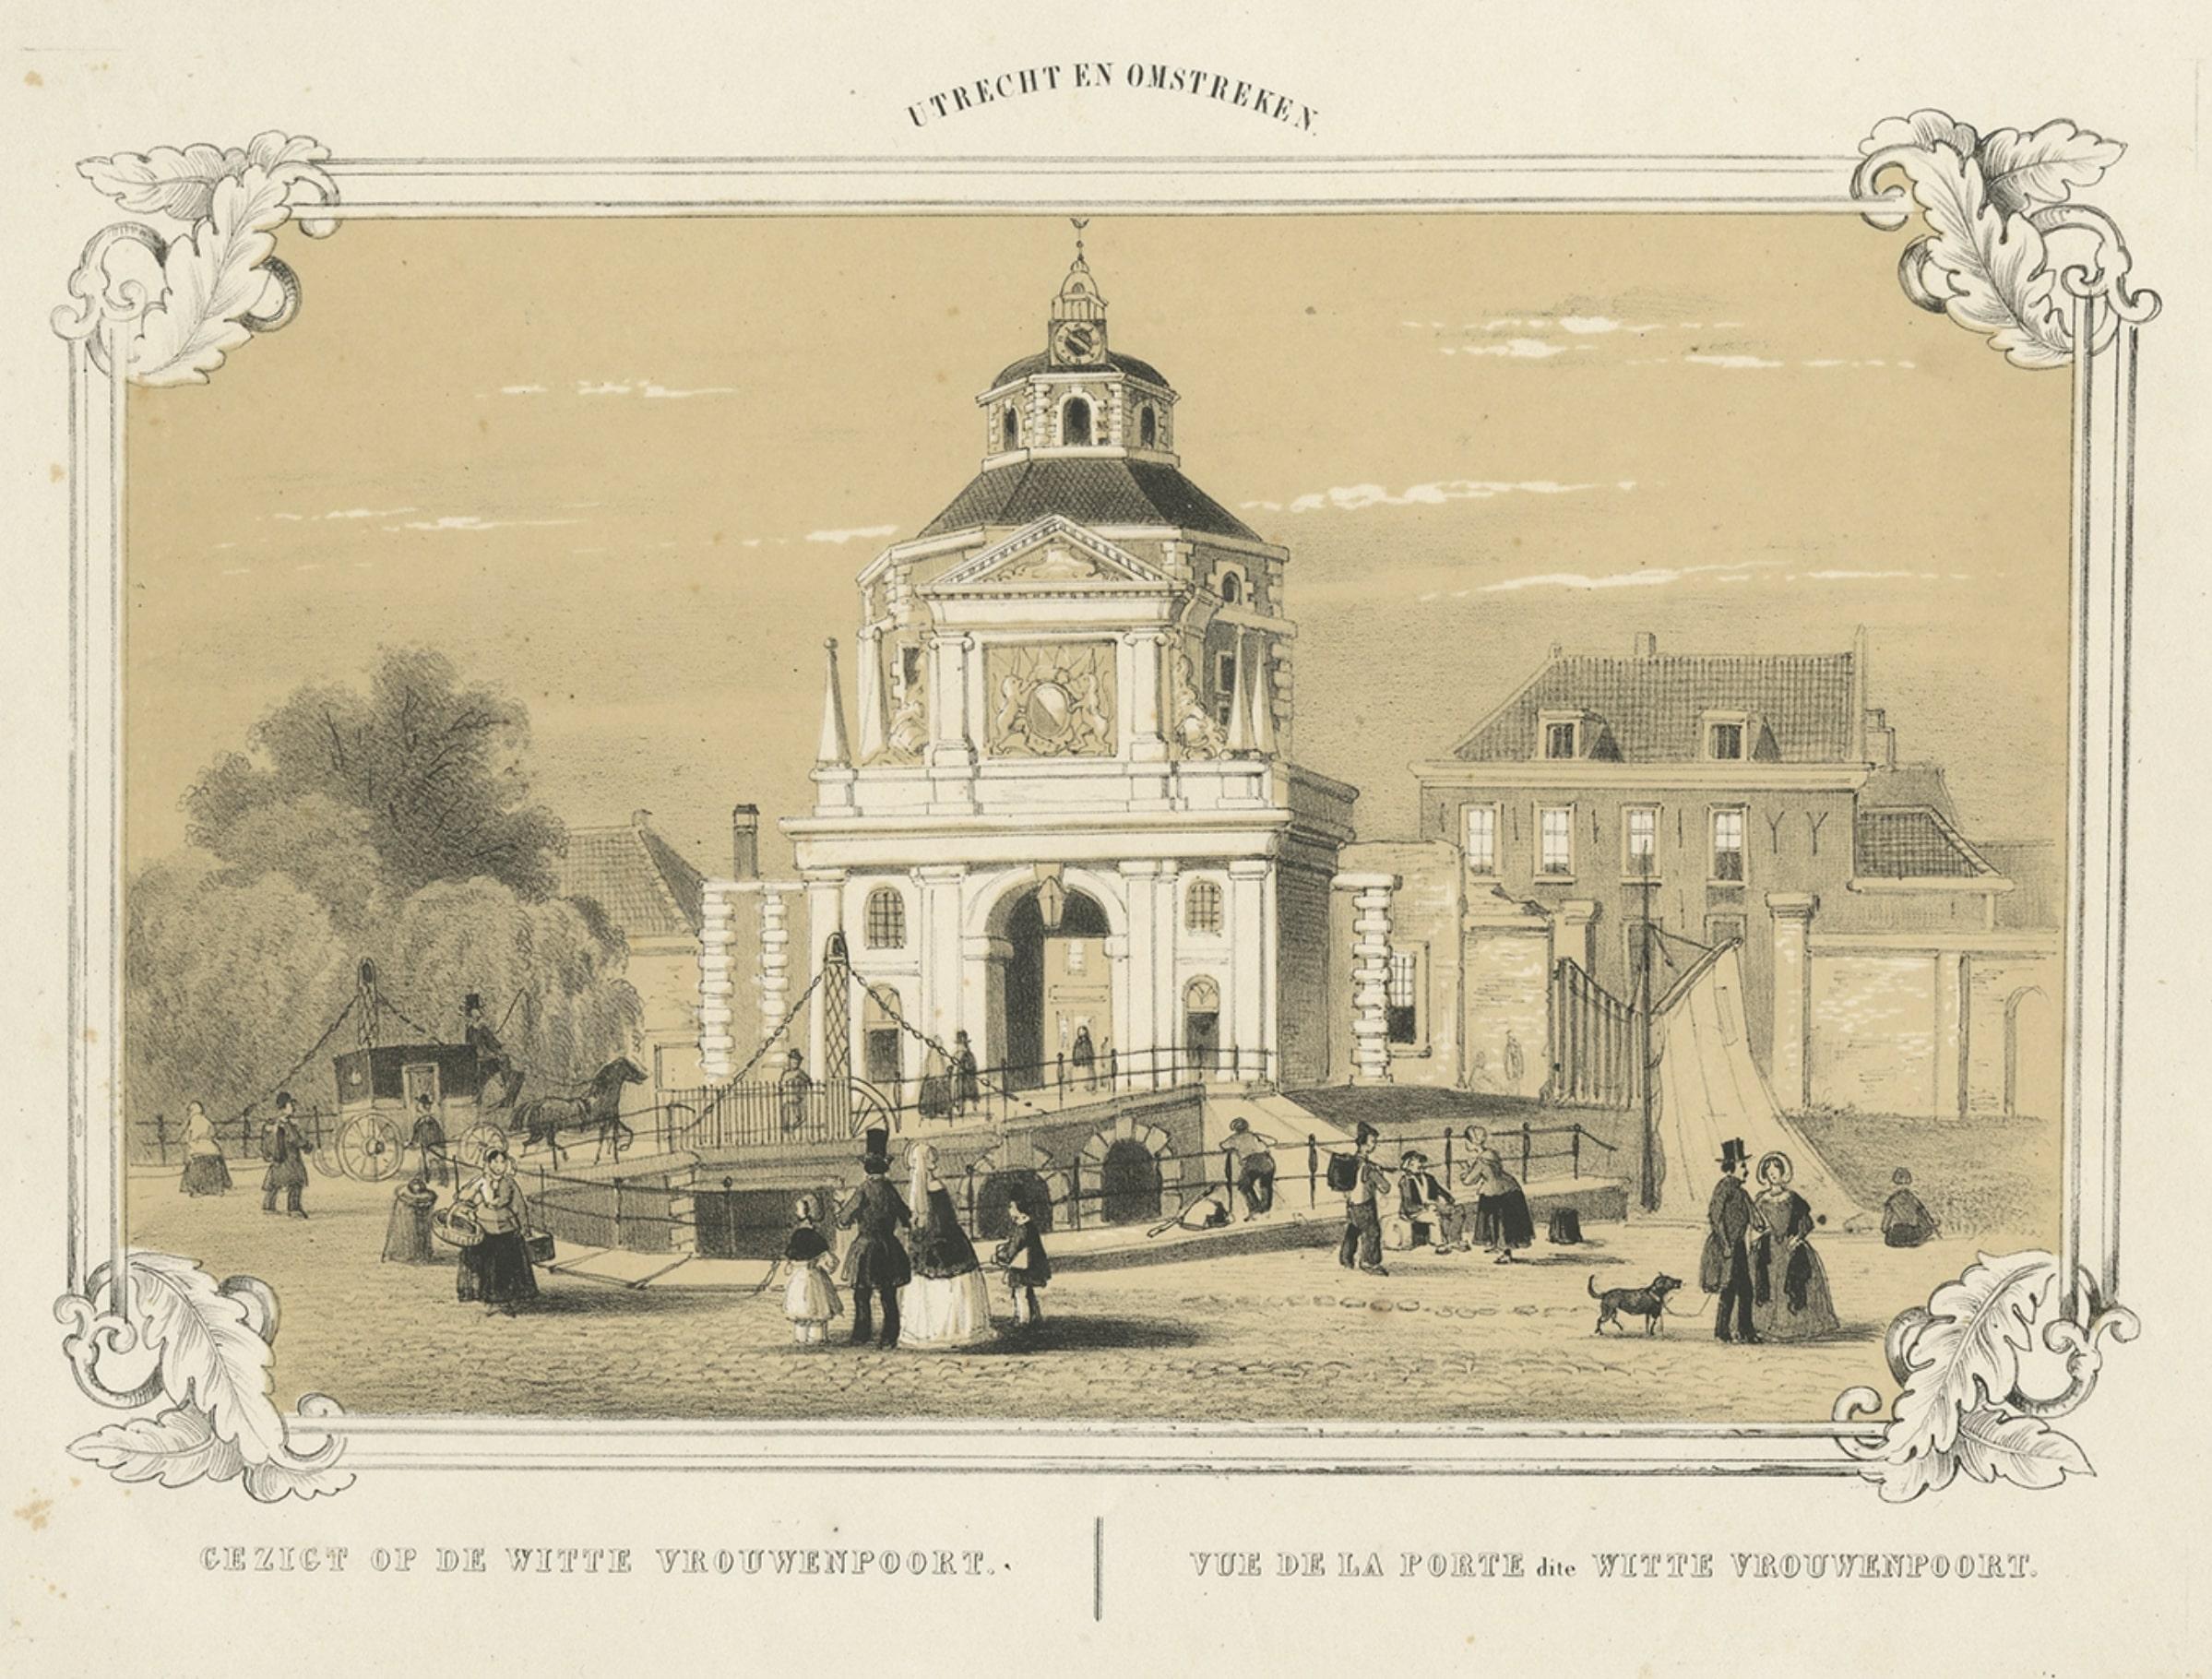 Old Sepia Print of the Wittevrouwenpoort in Utrecht in The Netherlands, c.1860